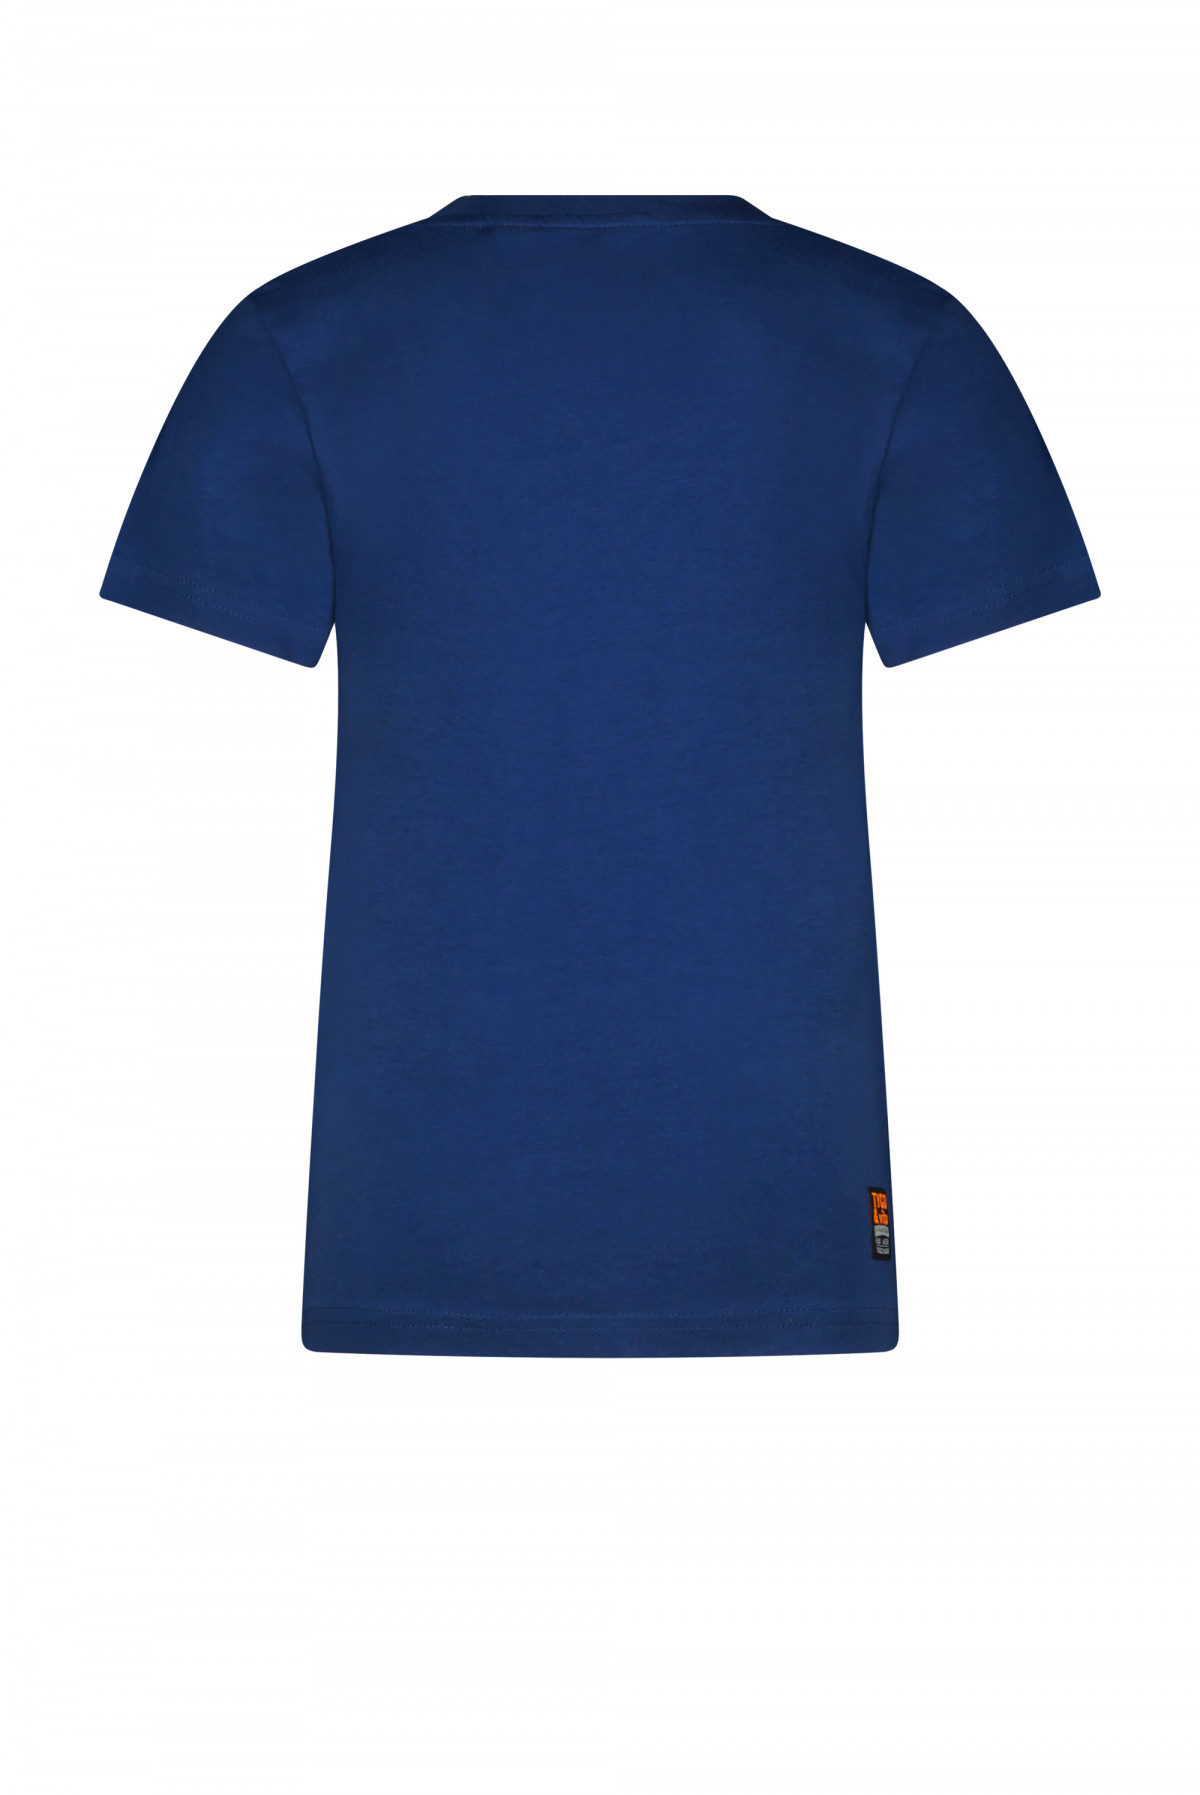 T-shirt bleu - Goal Keeper - Boutique Toup'tibou - photo 7